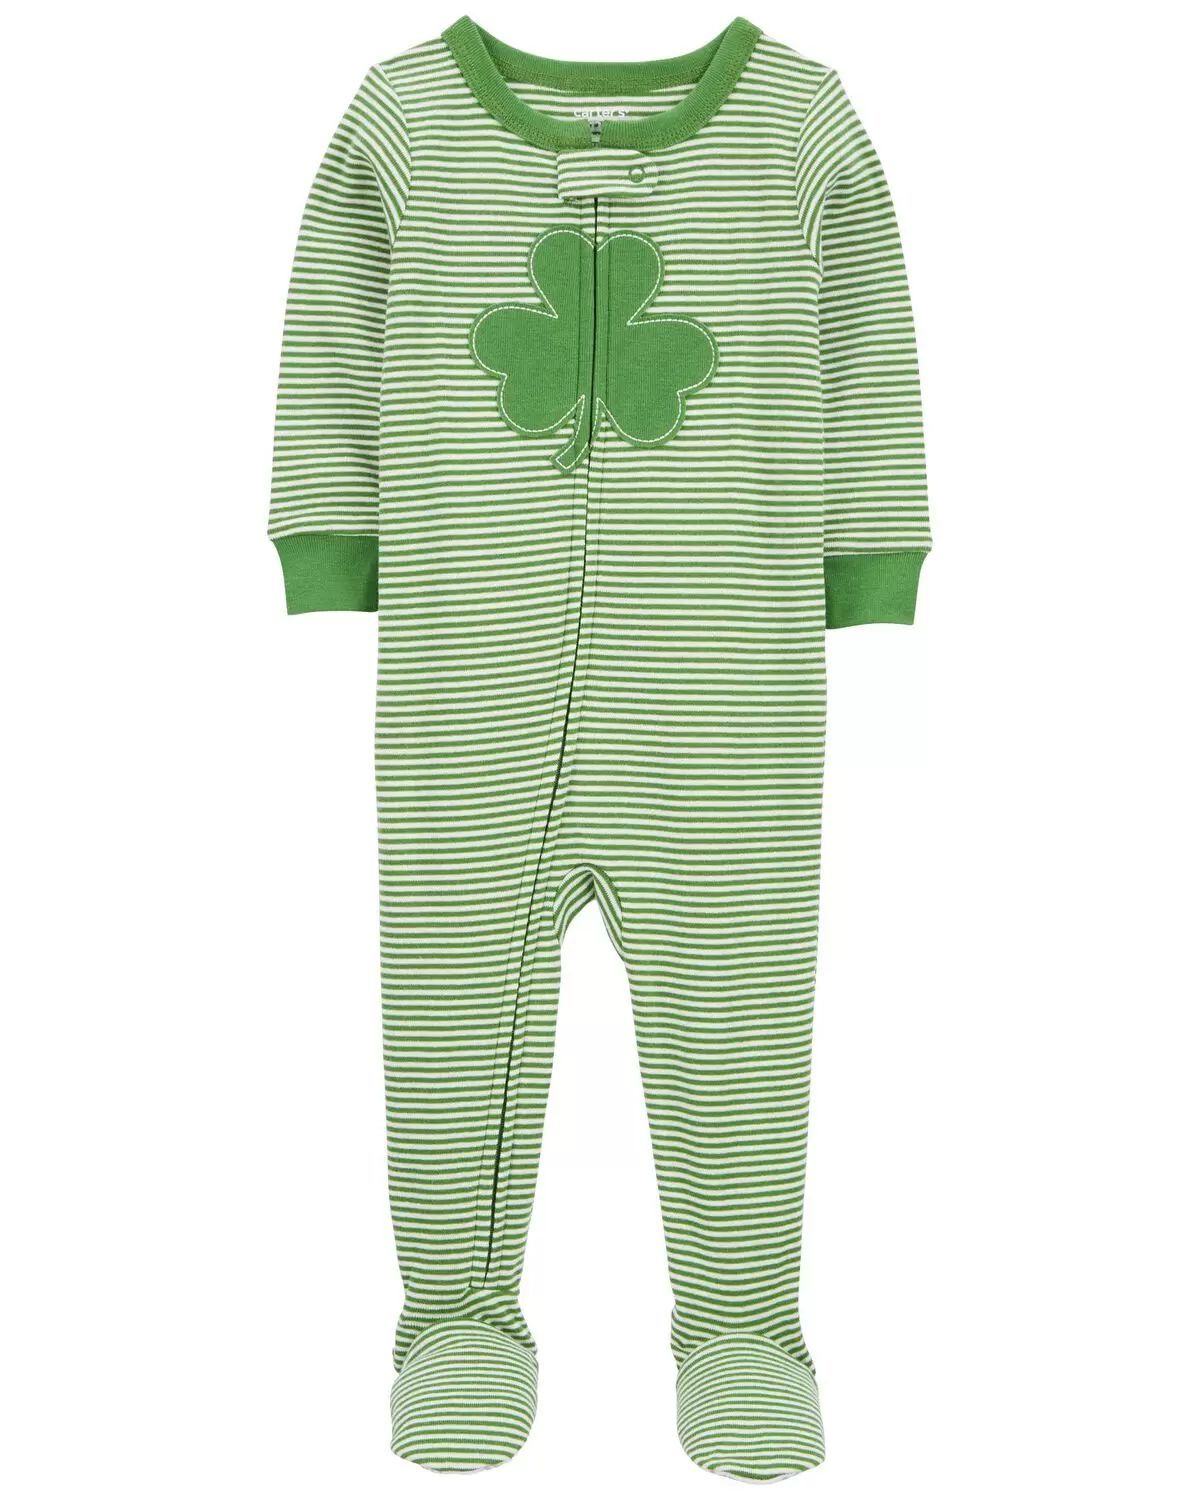 Green Toddler 1-Piece St. Patrick's Day 100% Snug Fit Cotton Footie Pajamas | carters.com | Carter's